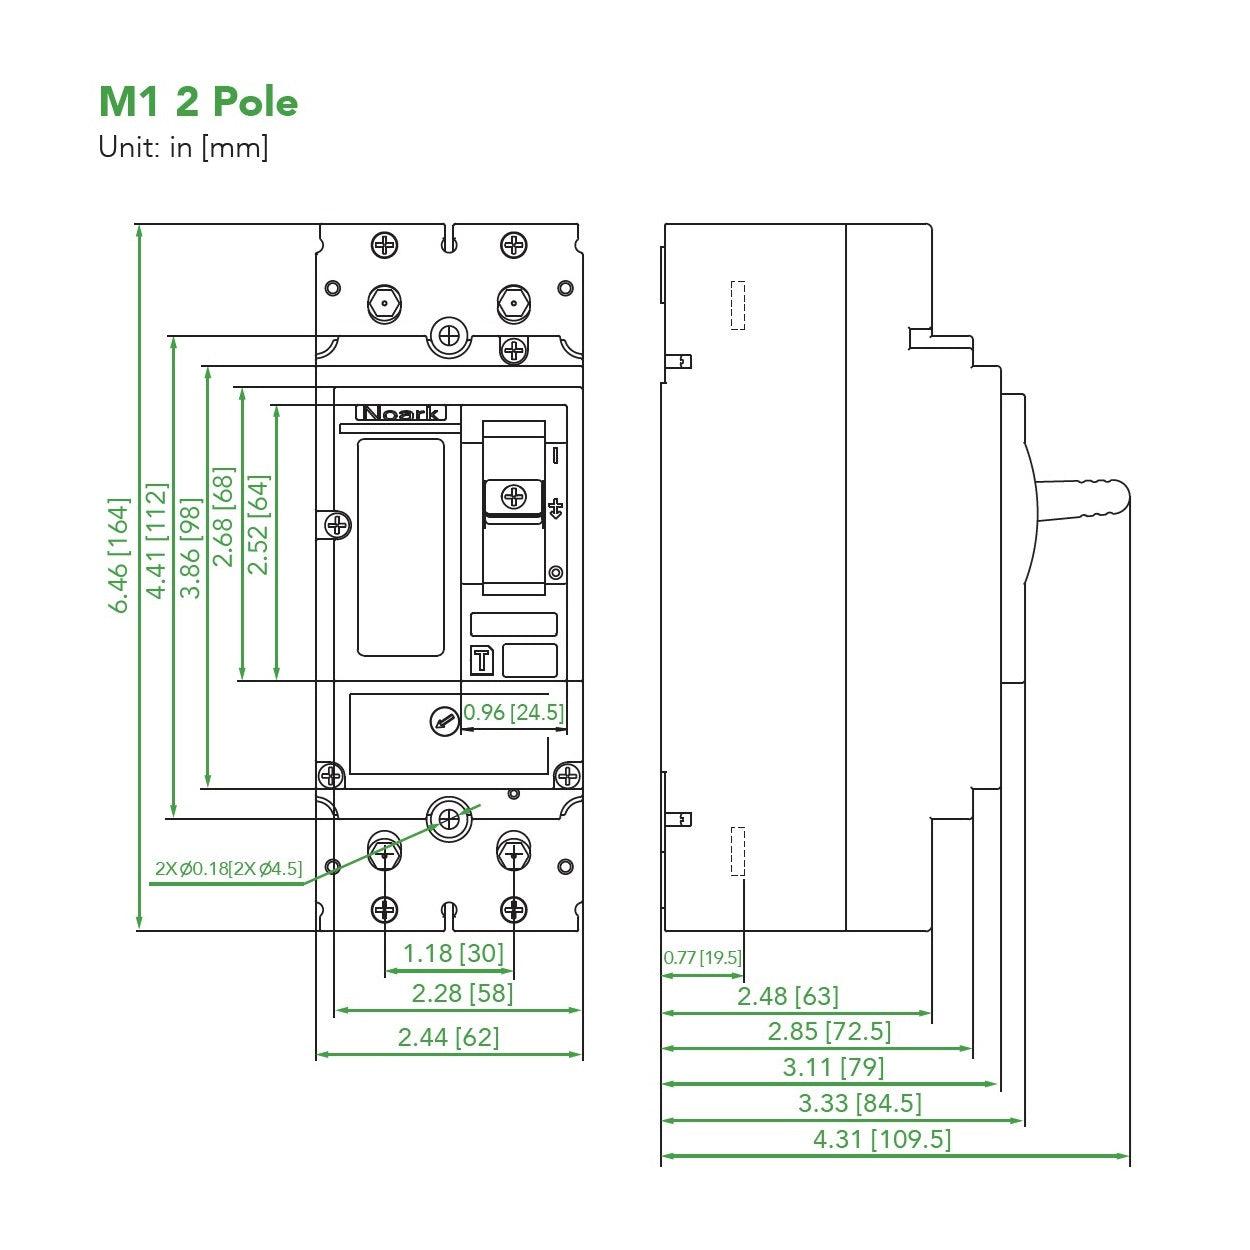 NOARK® Molded Case Circuit Breaker 25A, 2P IC Class S | M1S25T22L - Forces Inc